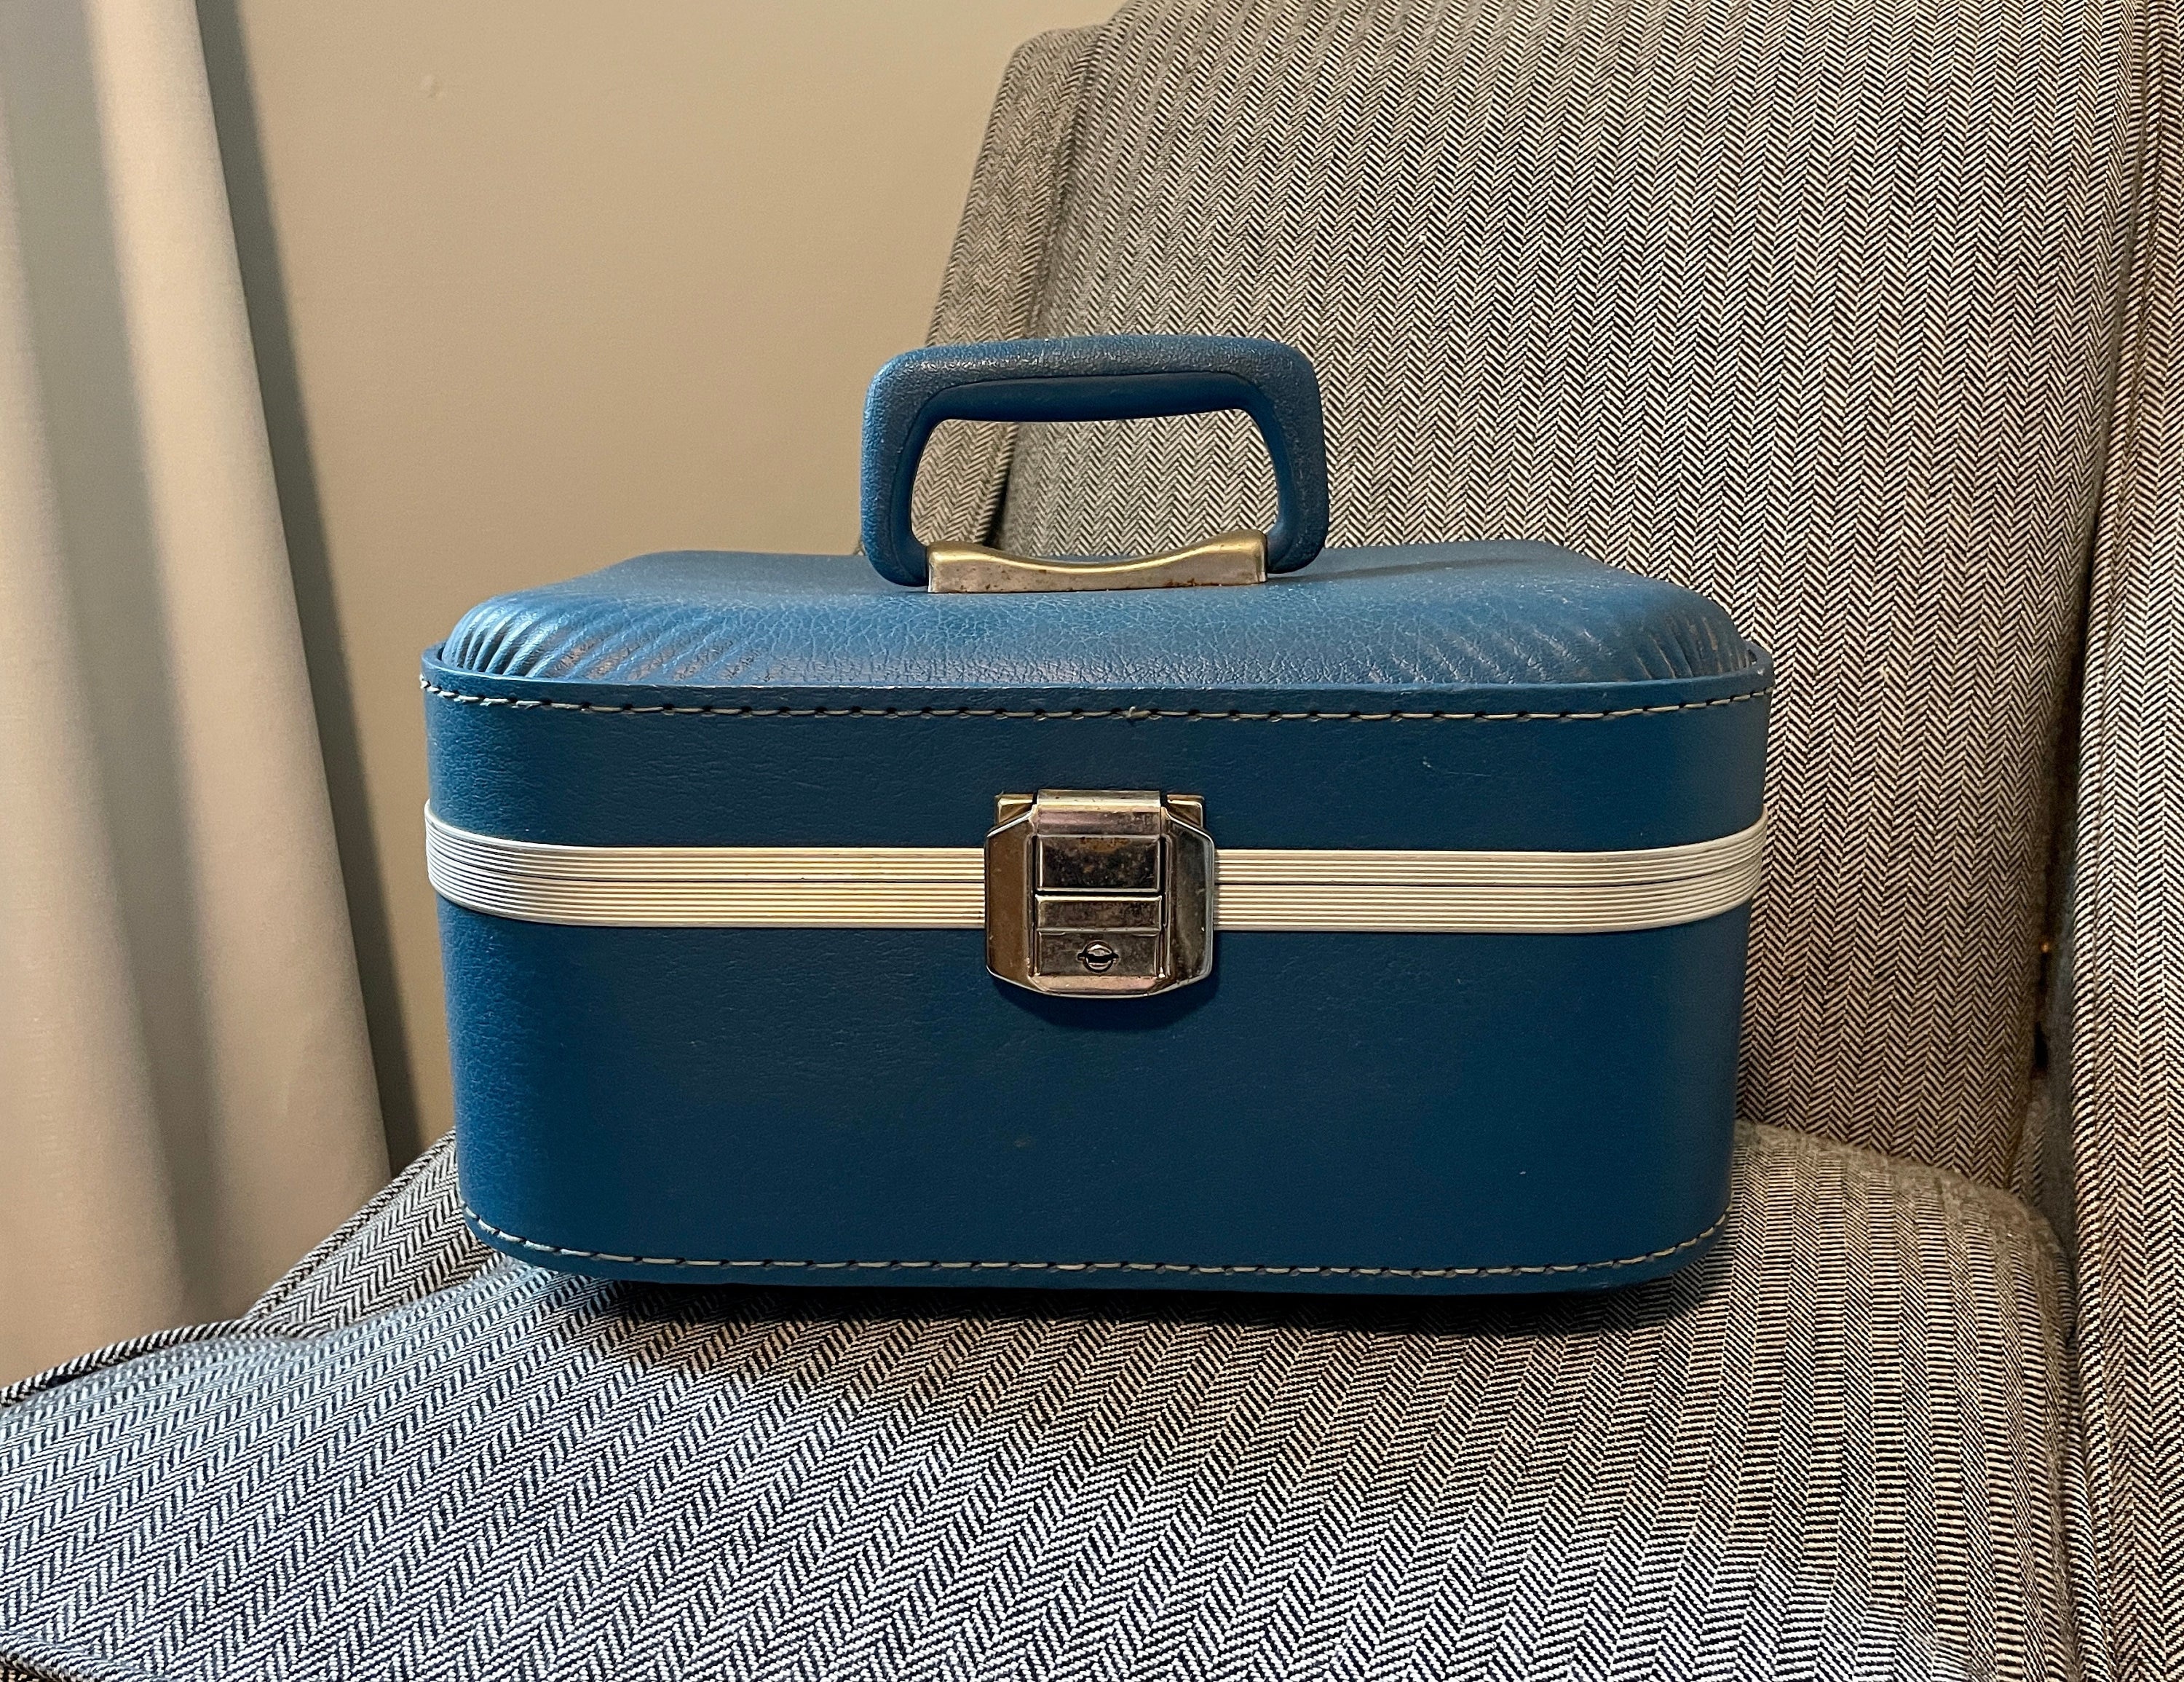 Wooden Briefcase Art Case Artist Travel Box Palette Suitcase Vintage